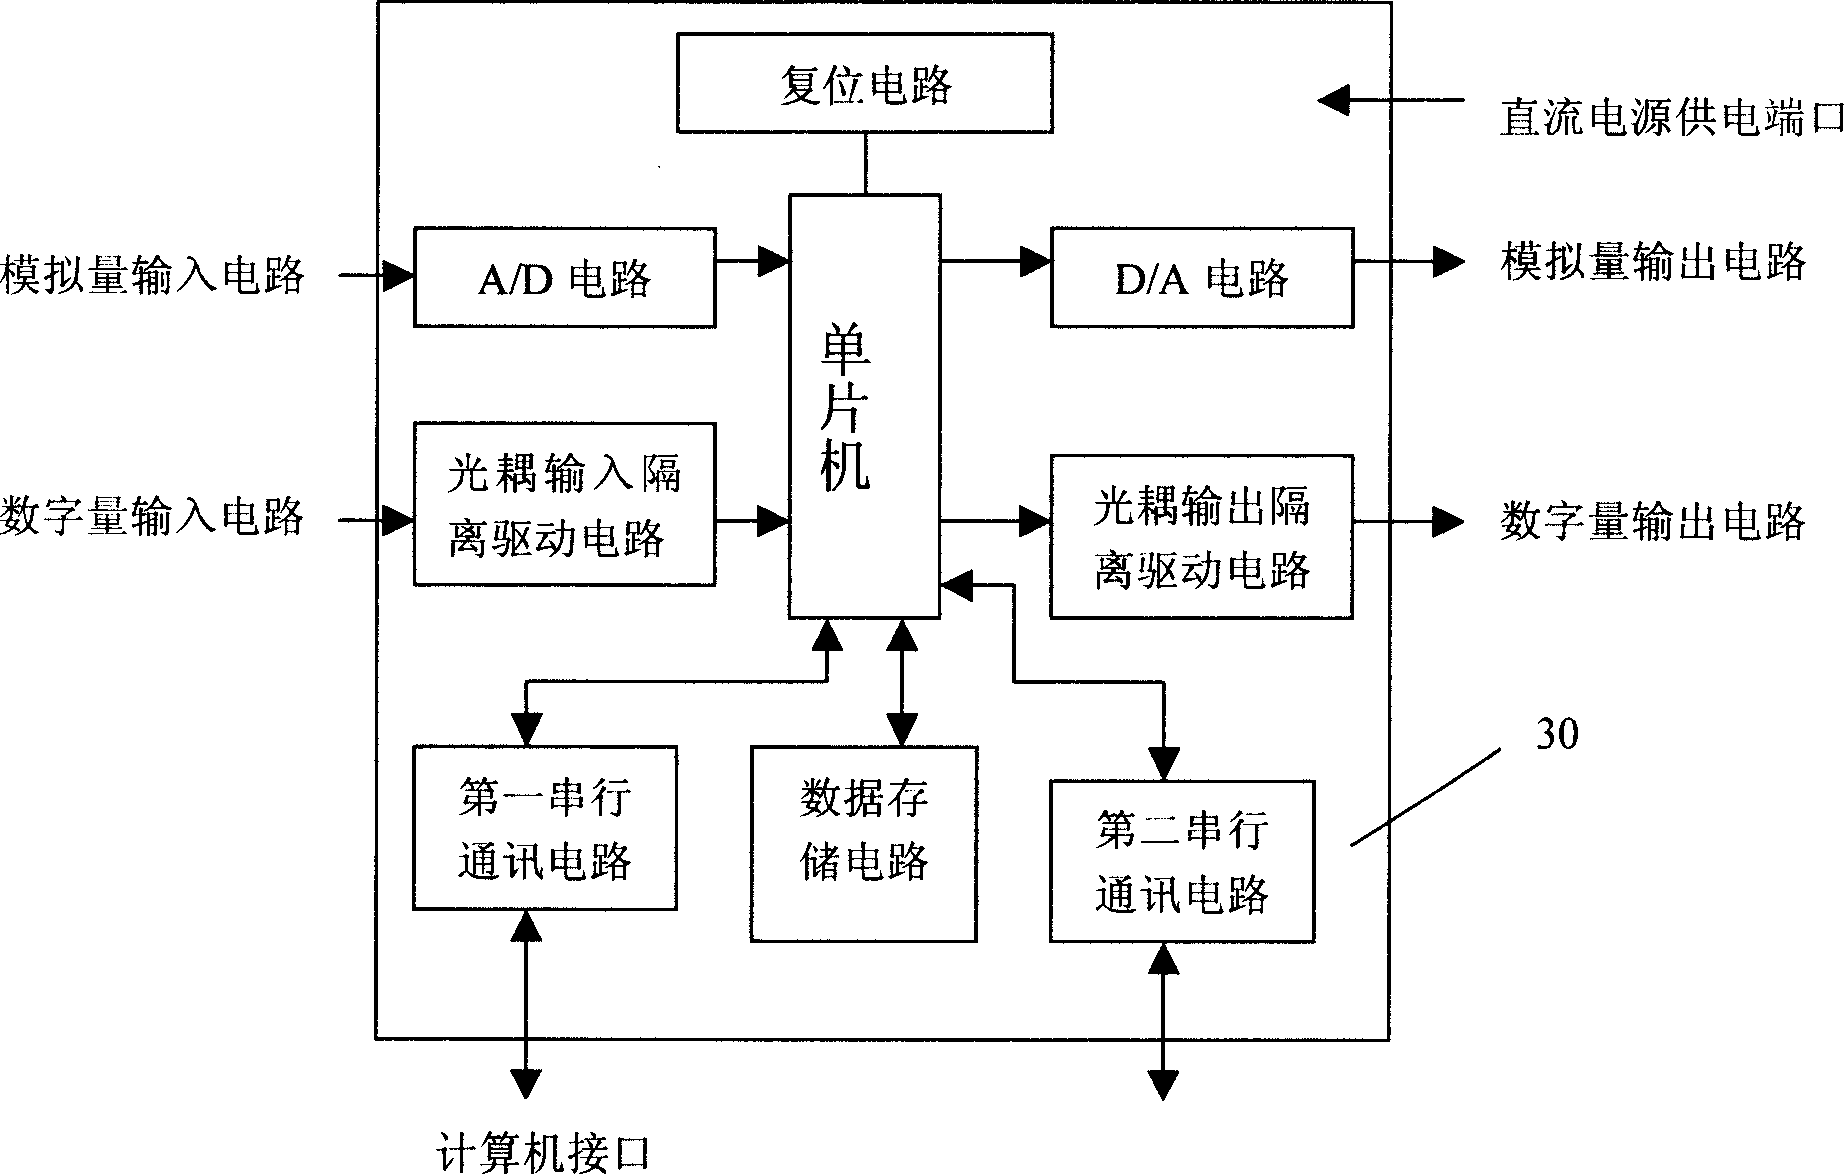 Programmable control module based on SCM